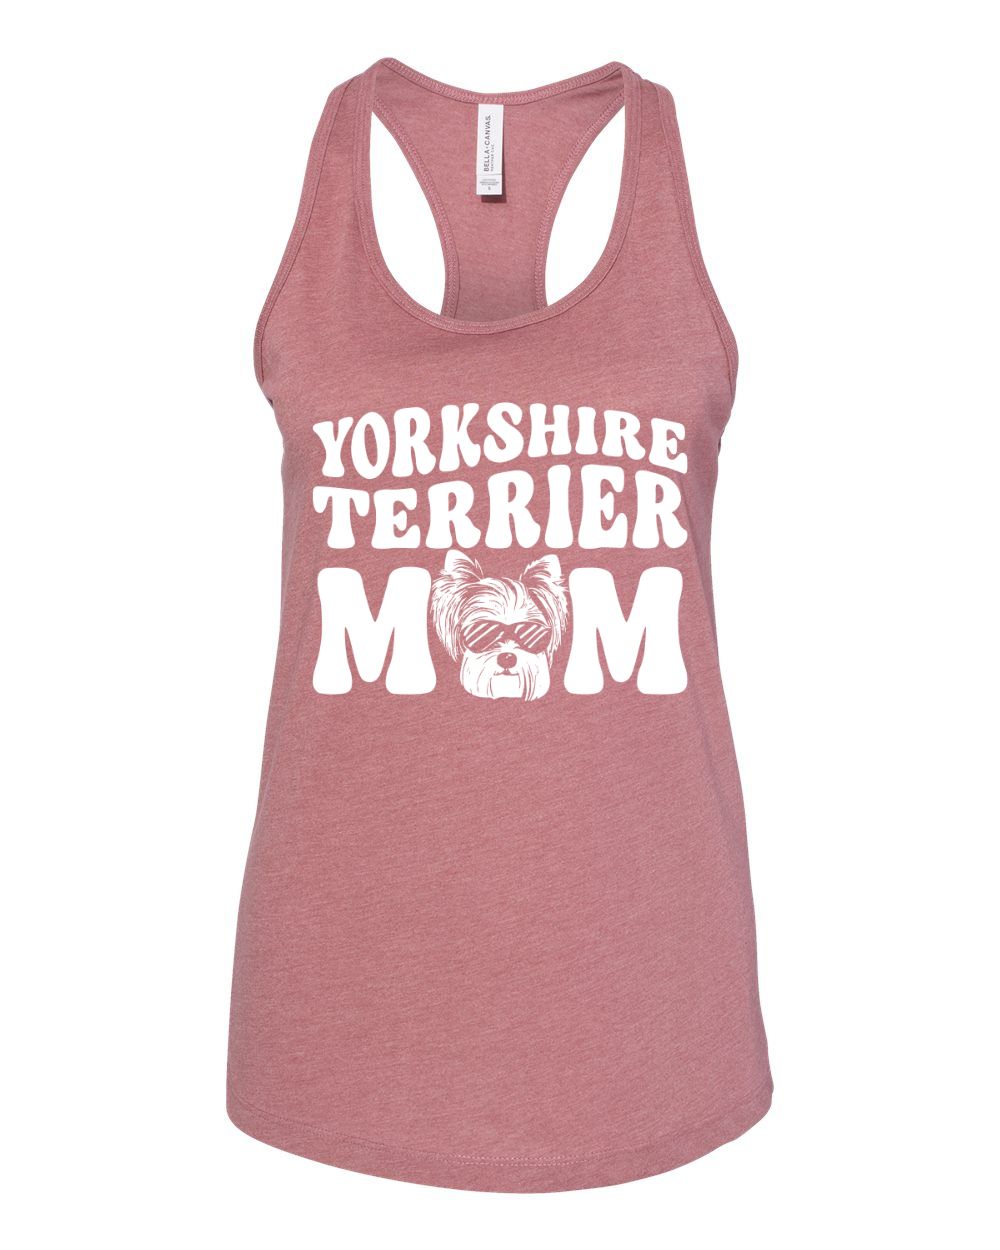 Yorkshire Terrier Mom Tank Top